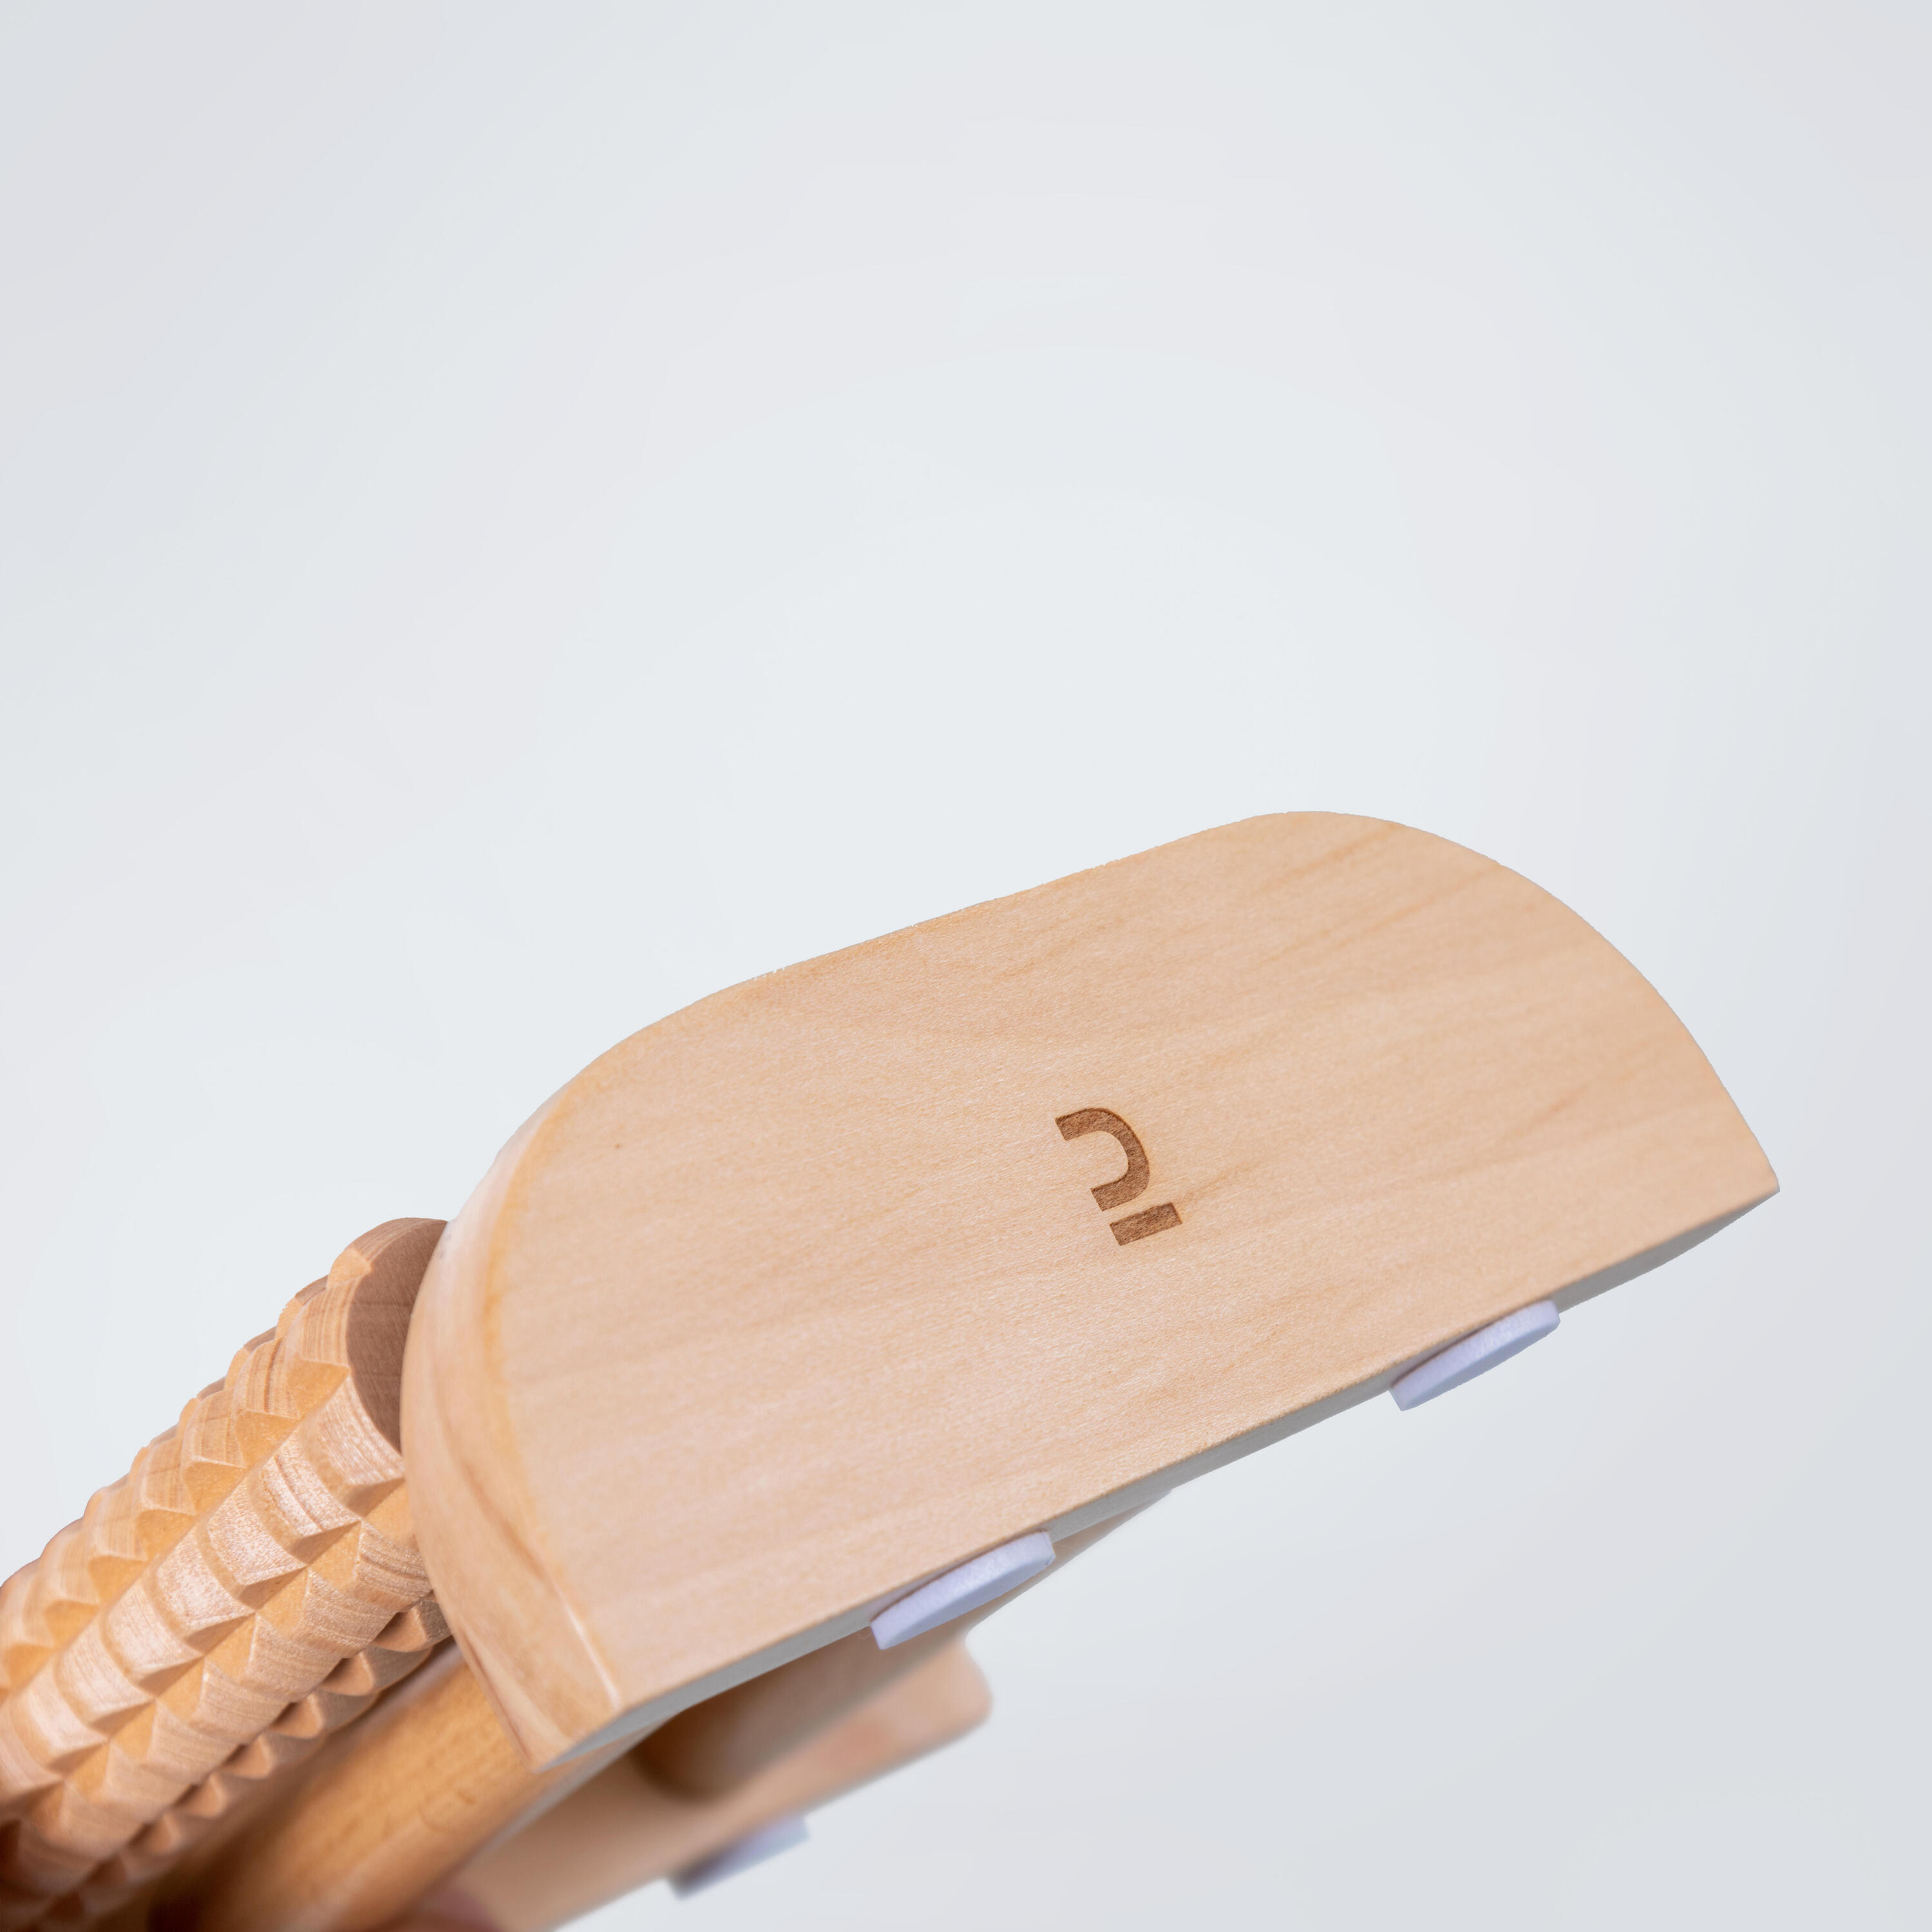 Wooden foot massage tool 3/5